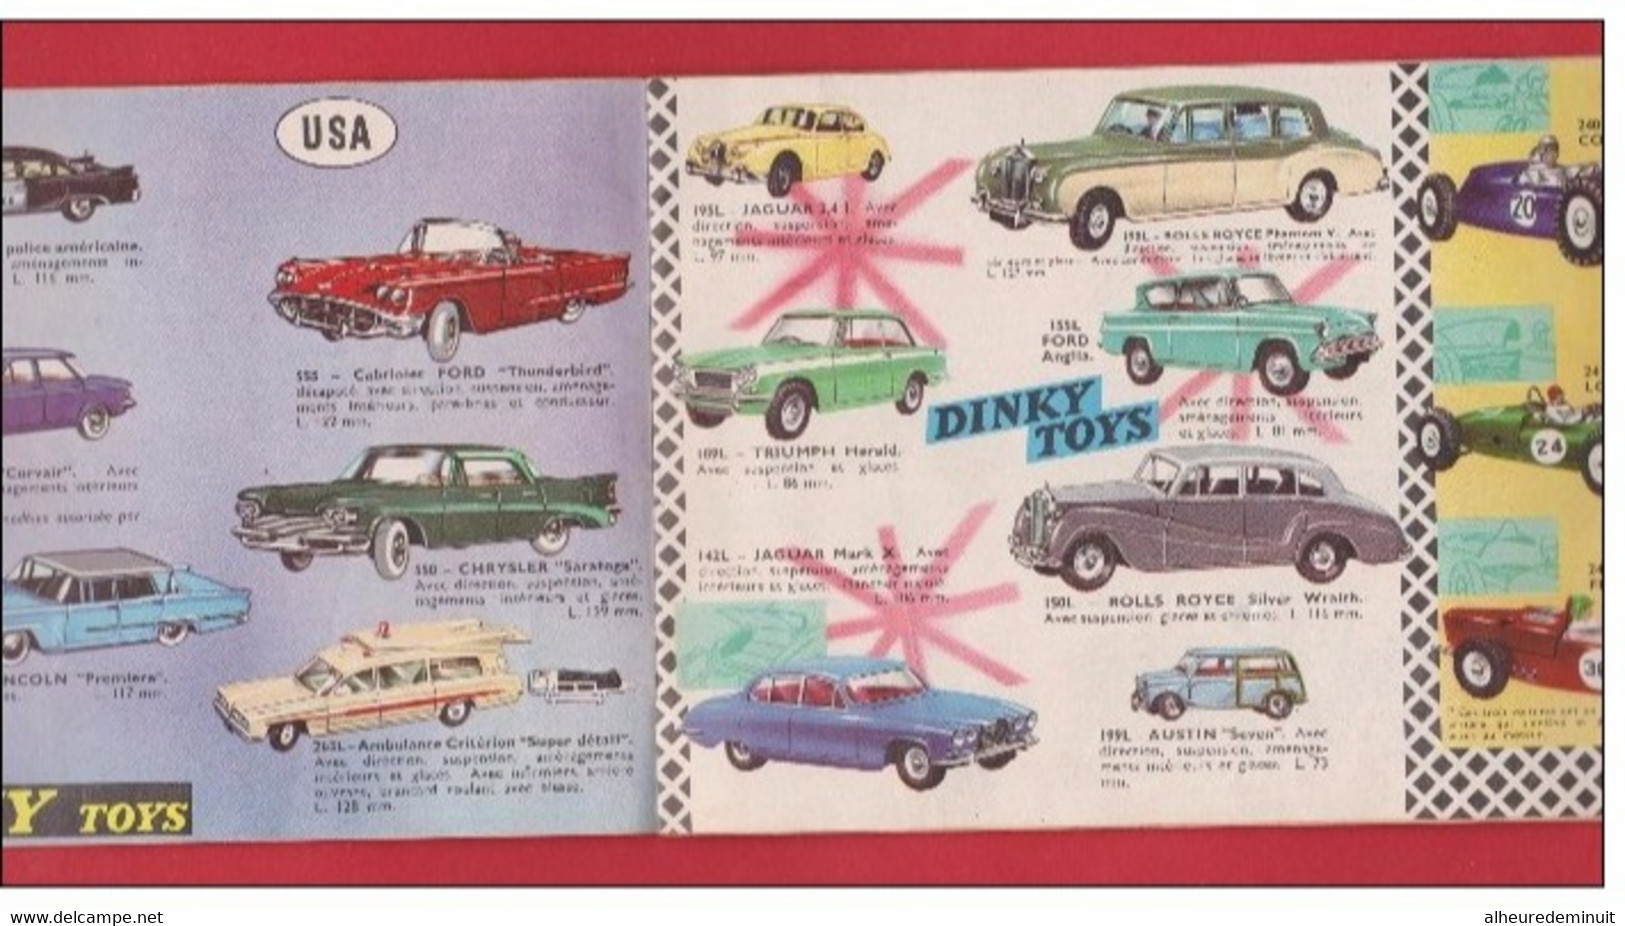 Catalogue DINKY TOYS"SUPERTOYS"1964"voiture Miniature"camions"militaire"DS"Peugeot"Renault"Citroën"2cv"simca"opel - Magazines